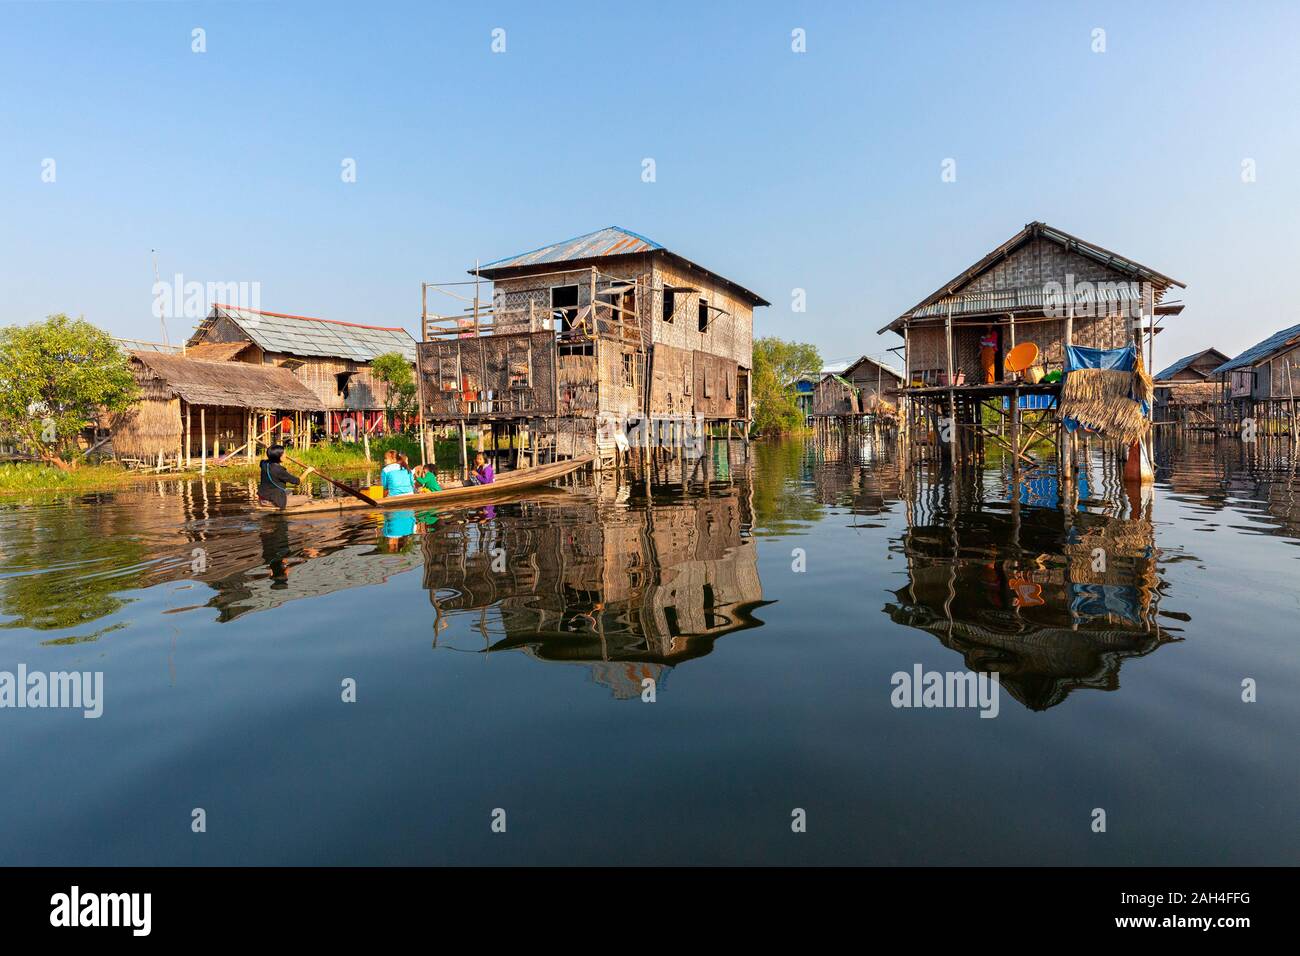 Stilt case nel villaggio galleggiante, in Lago Inle, Myanmar Foto Stock